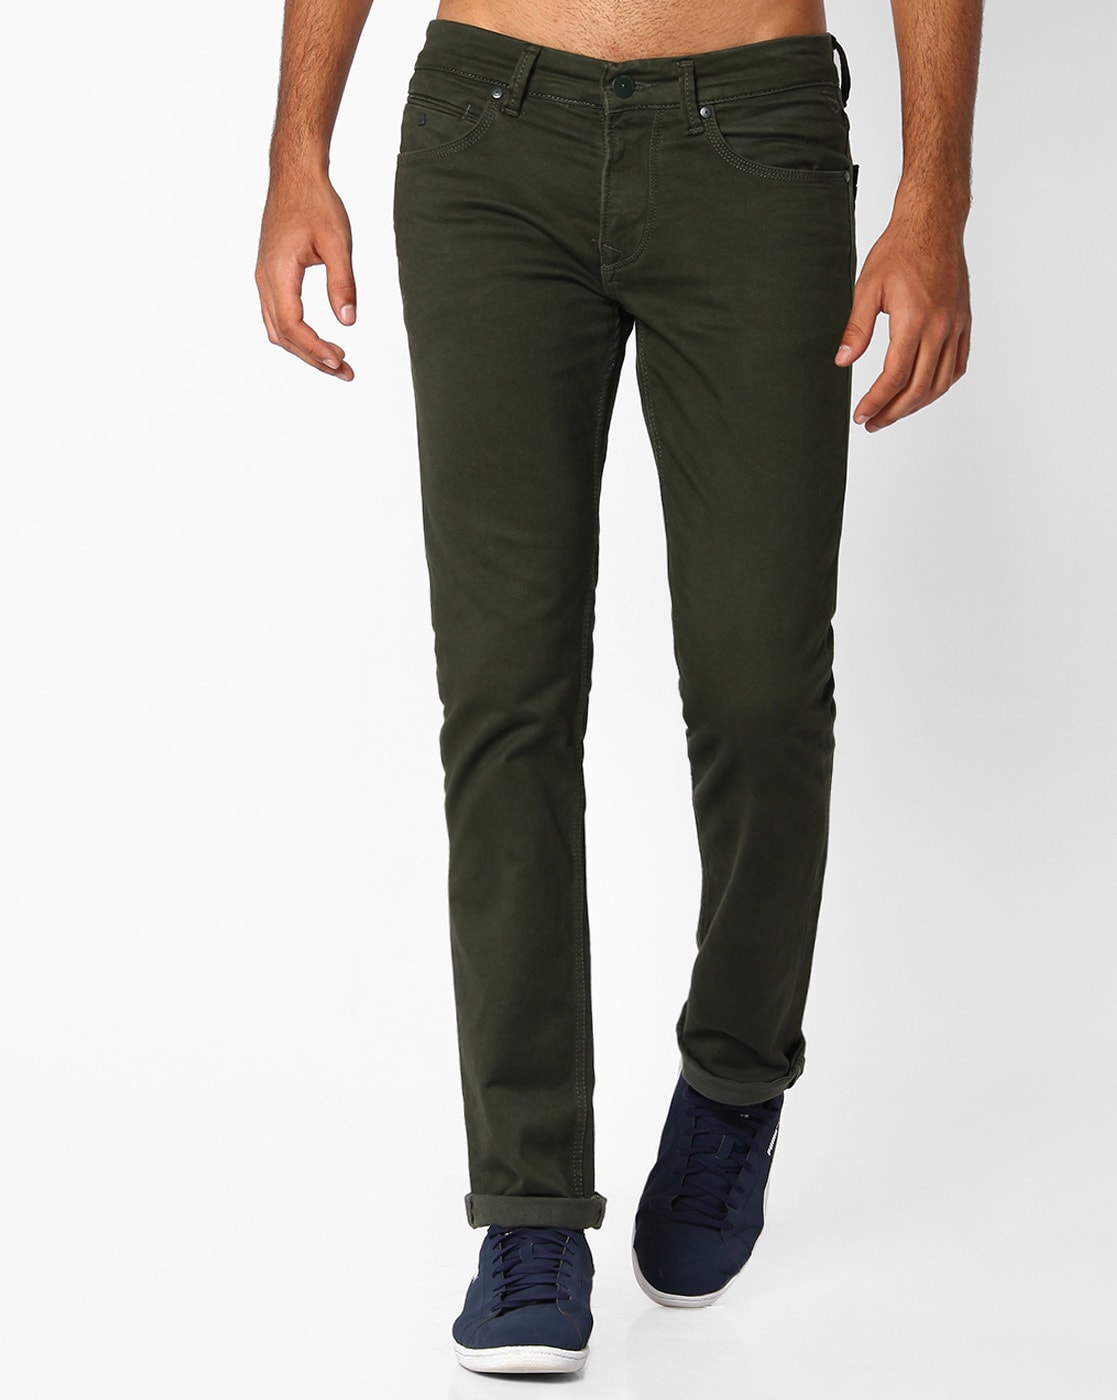 Details more than 145 green jeans pants best - in.eteachers